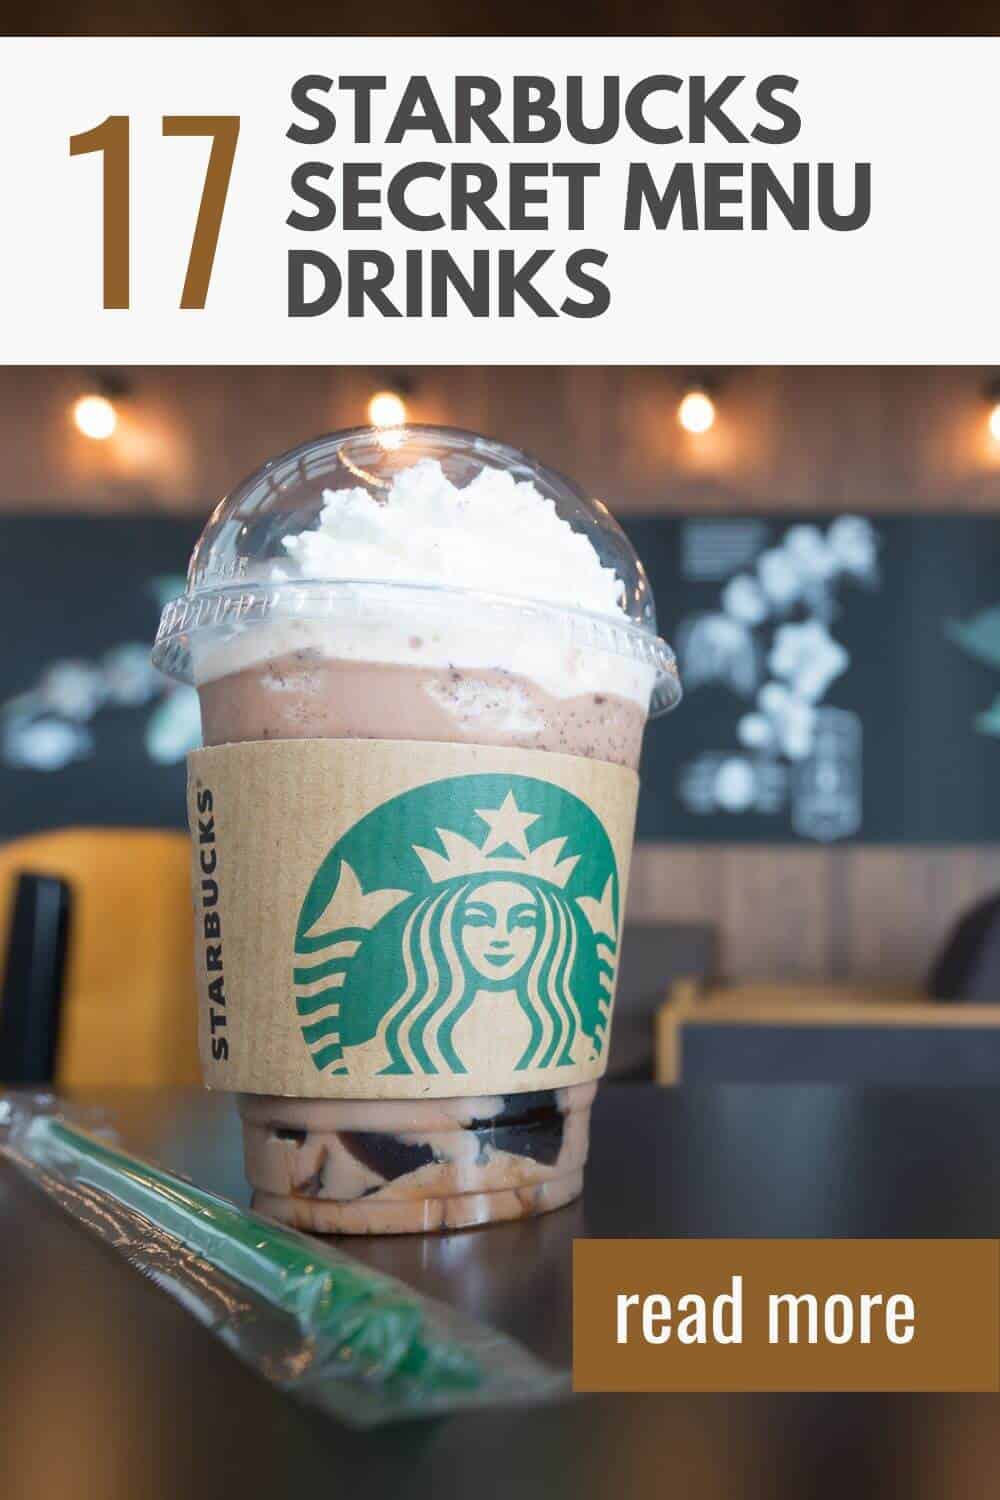 17 secret menu drinks offered by Starbucks.